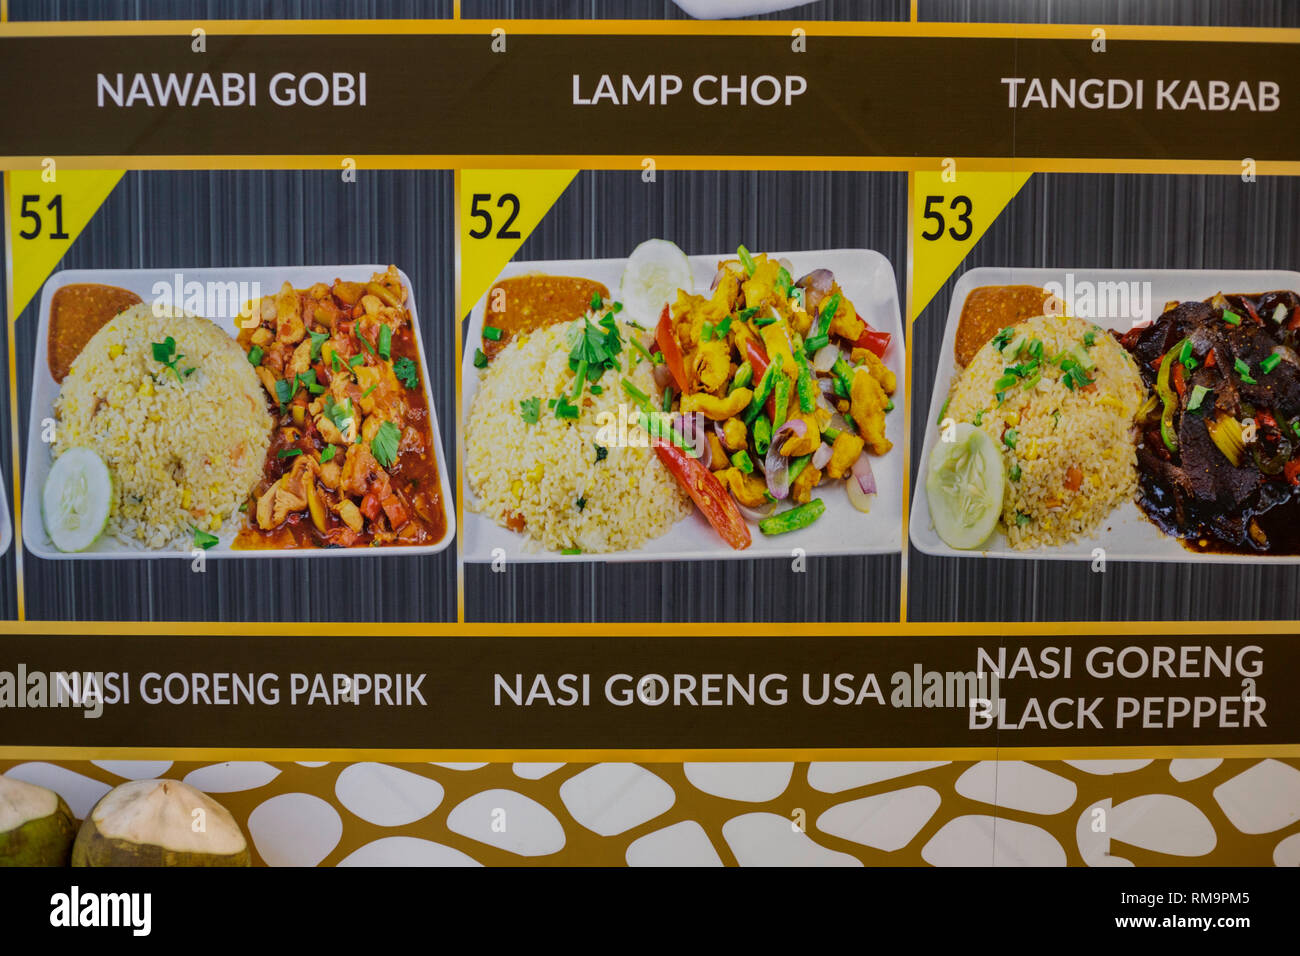 Restaurant Menu Offering Nasi Goreng USA, Stir-fried Rice Less Spicy than Usual.  Singapore. Stock Photo